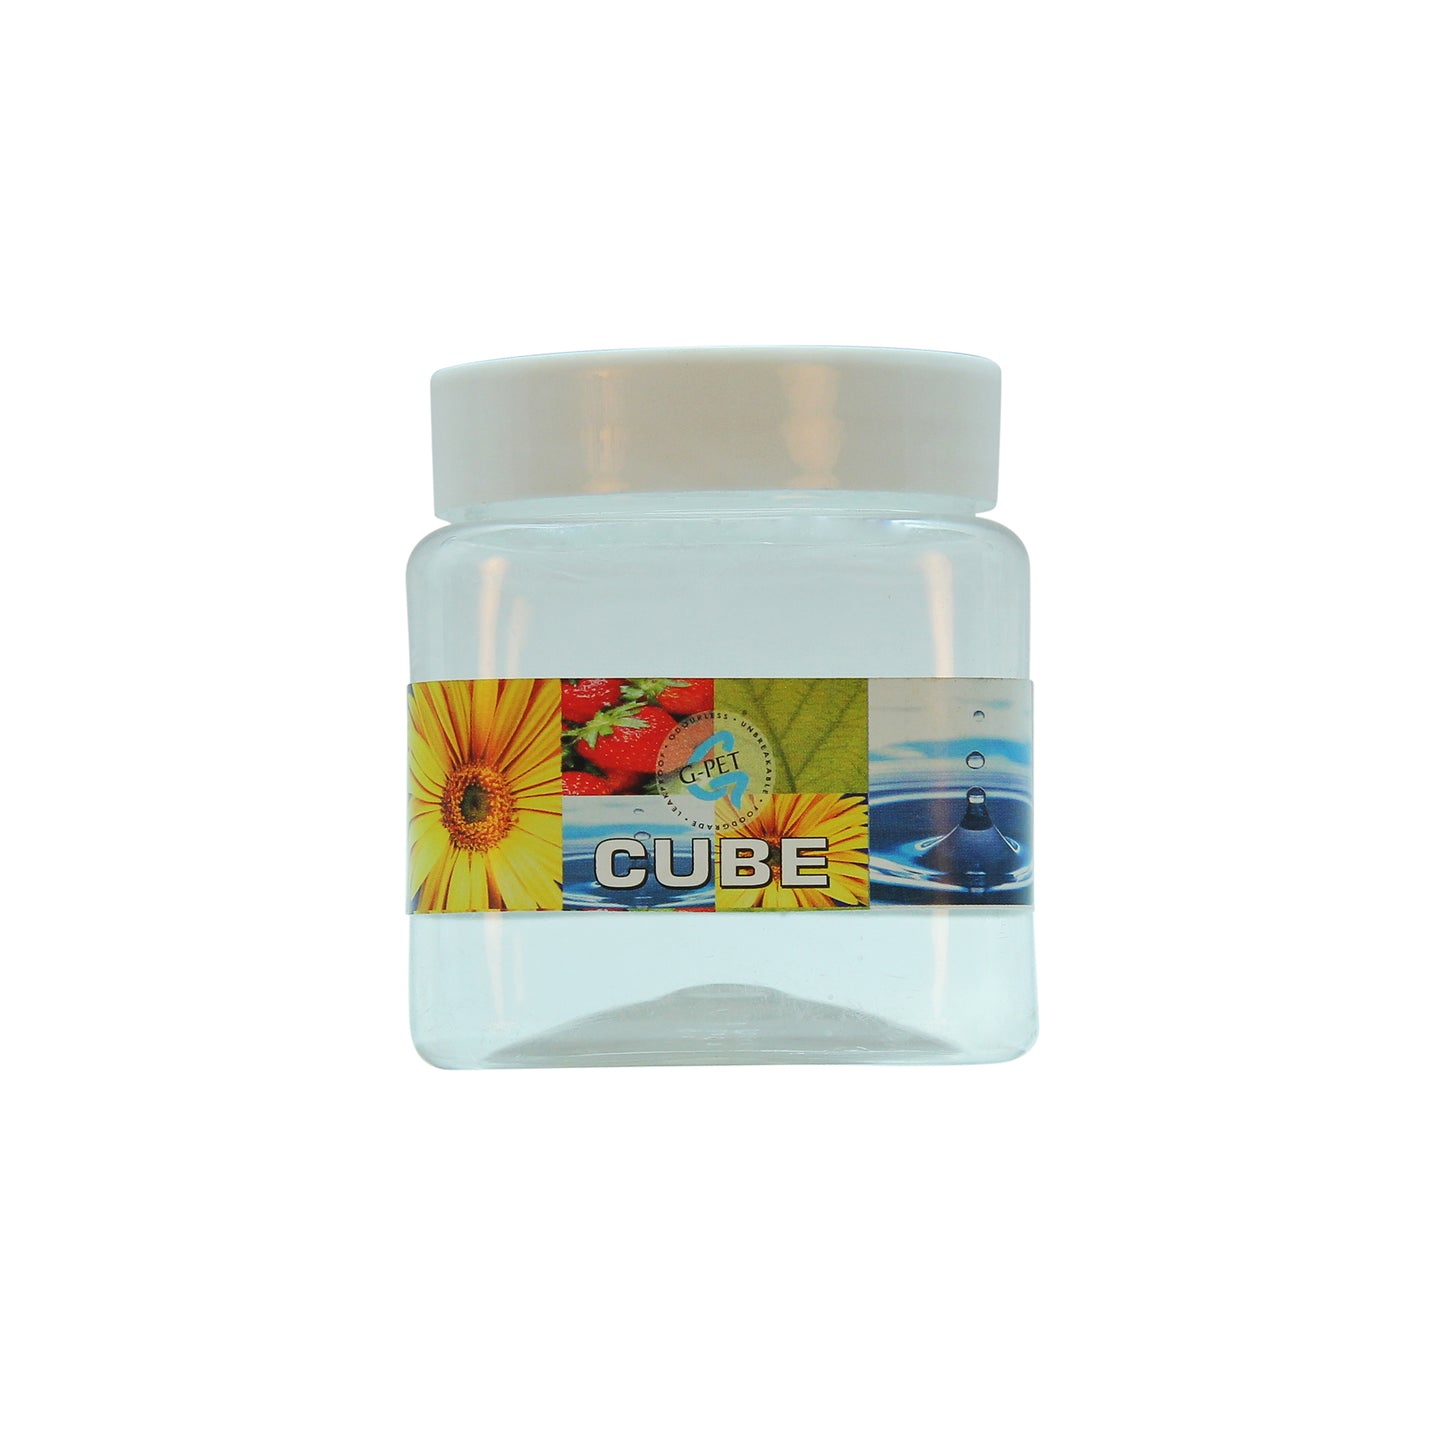 Cube PET Jar / Container PET Plastic Airtight Container with White Cap (6, 250ML)